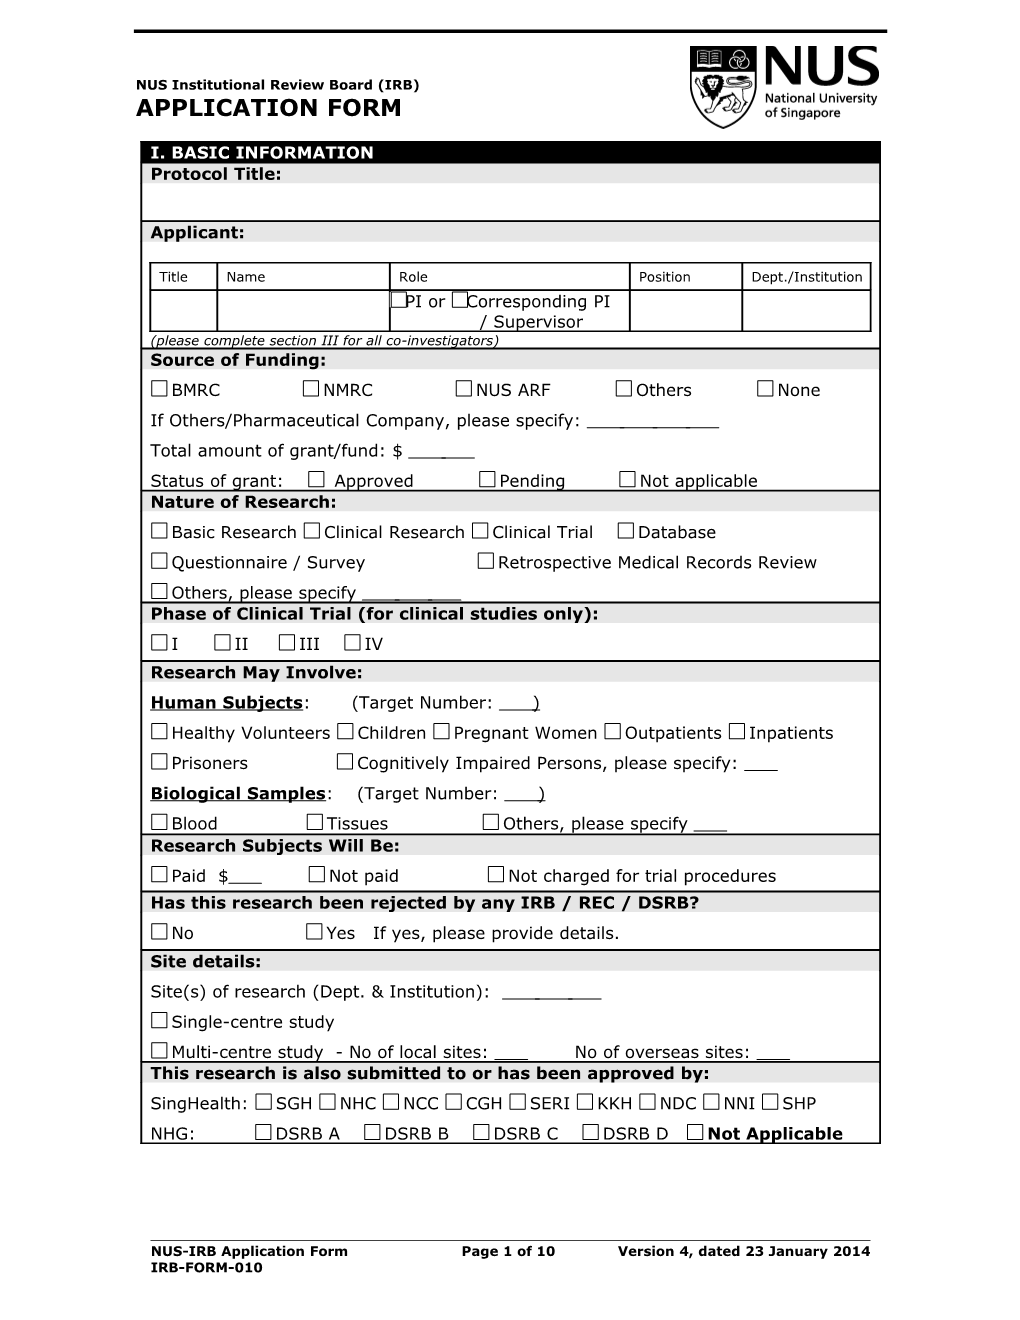 NUS-IRB Application Form